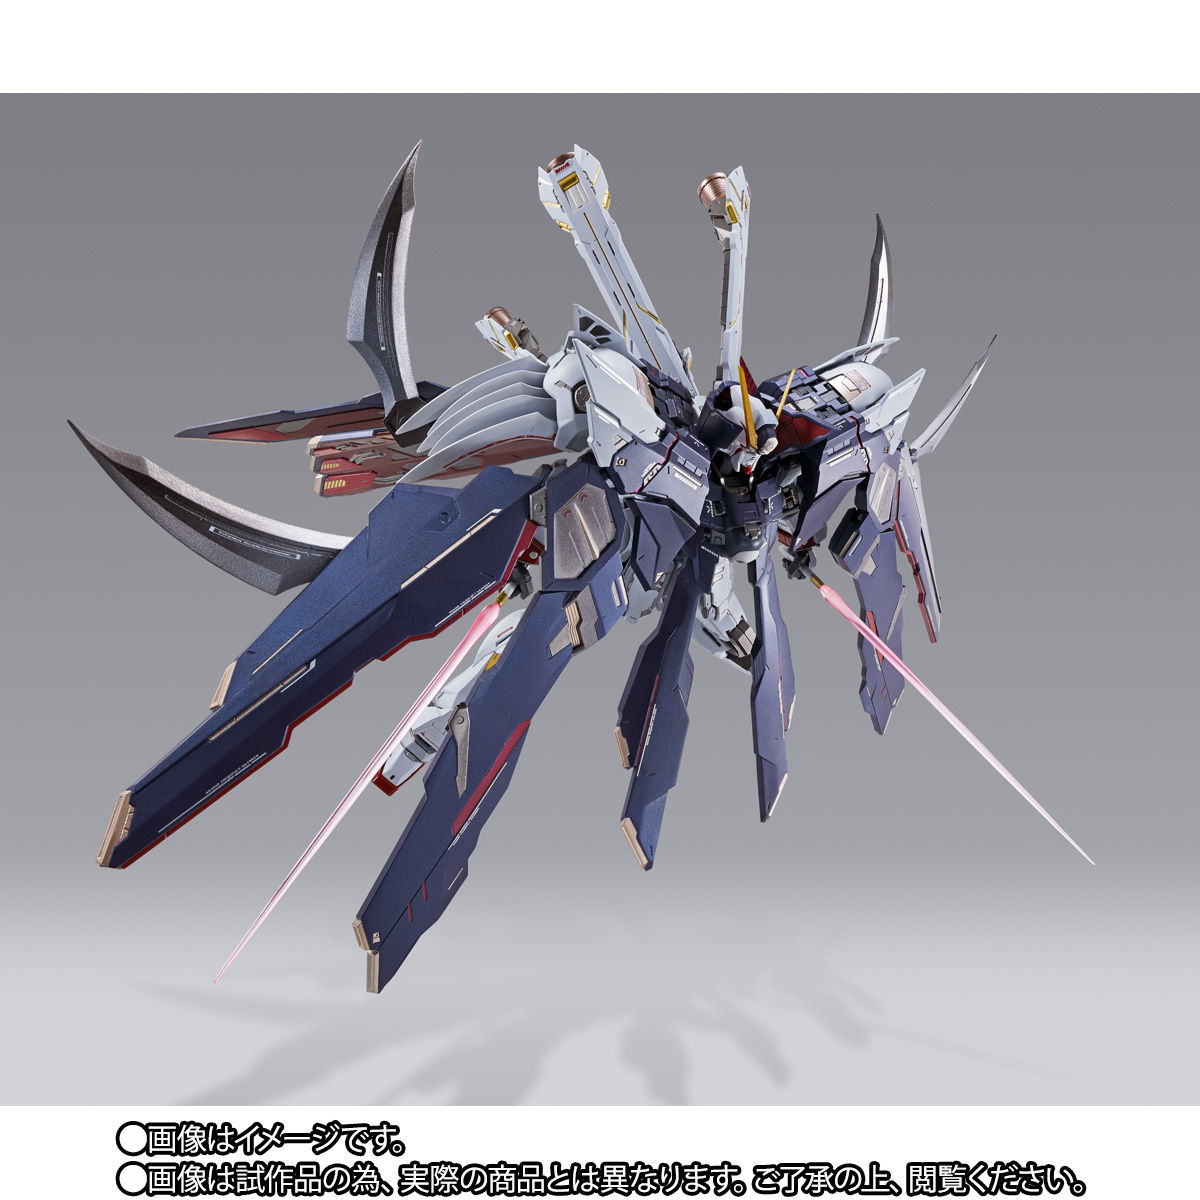 Metal Build XM-X1(F97) Crossbone Gundam X-1 Full Cloth